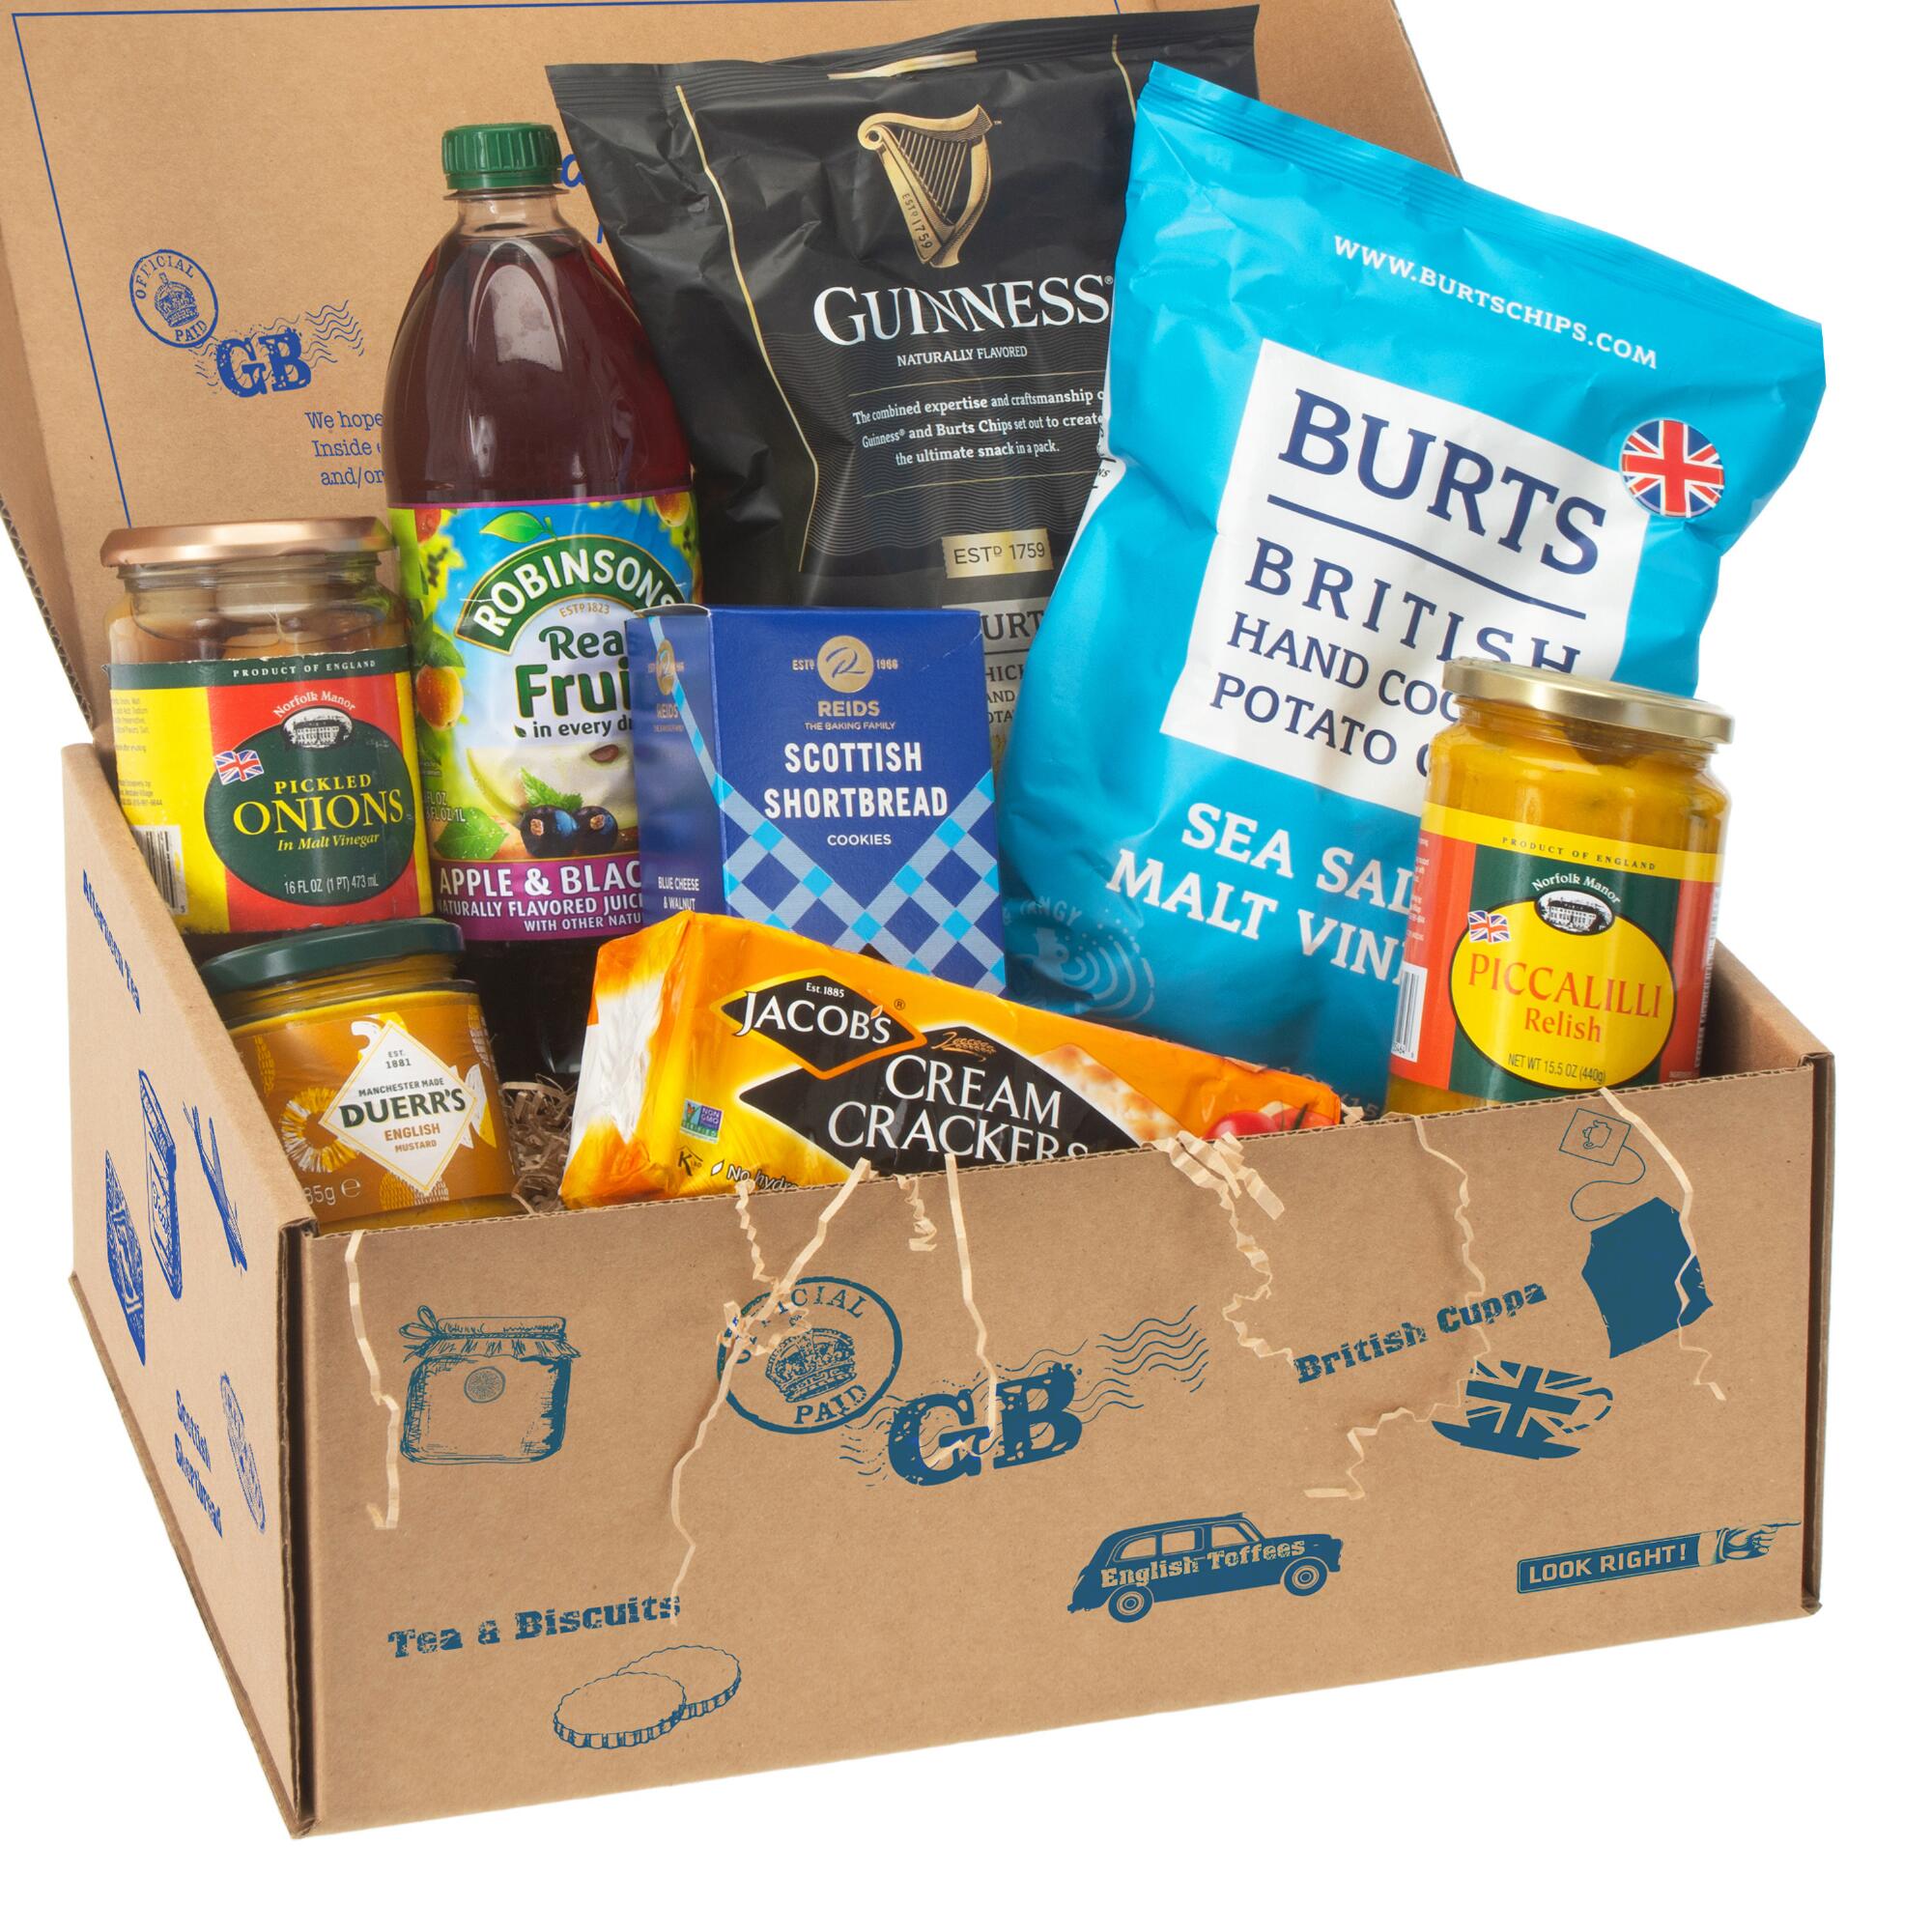 British Pub Ploughman's Food Gift Box by World Market